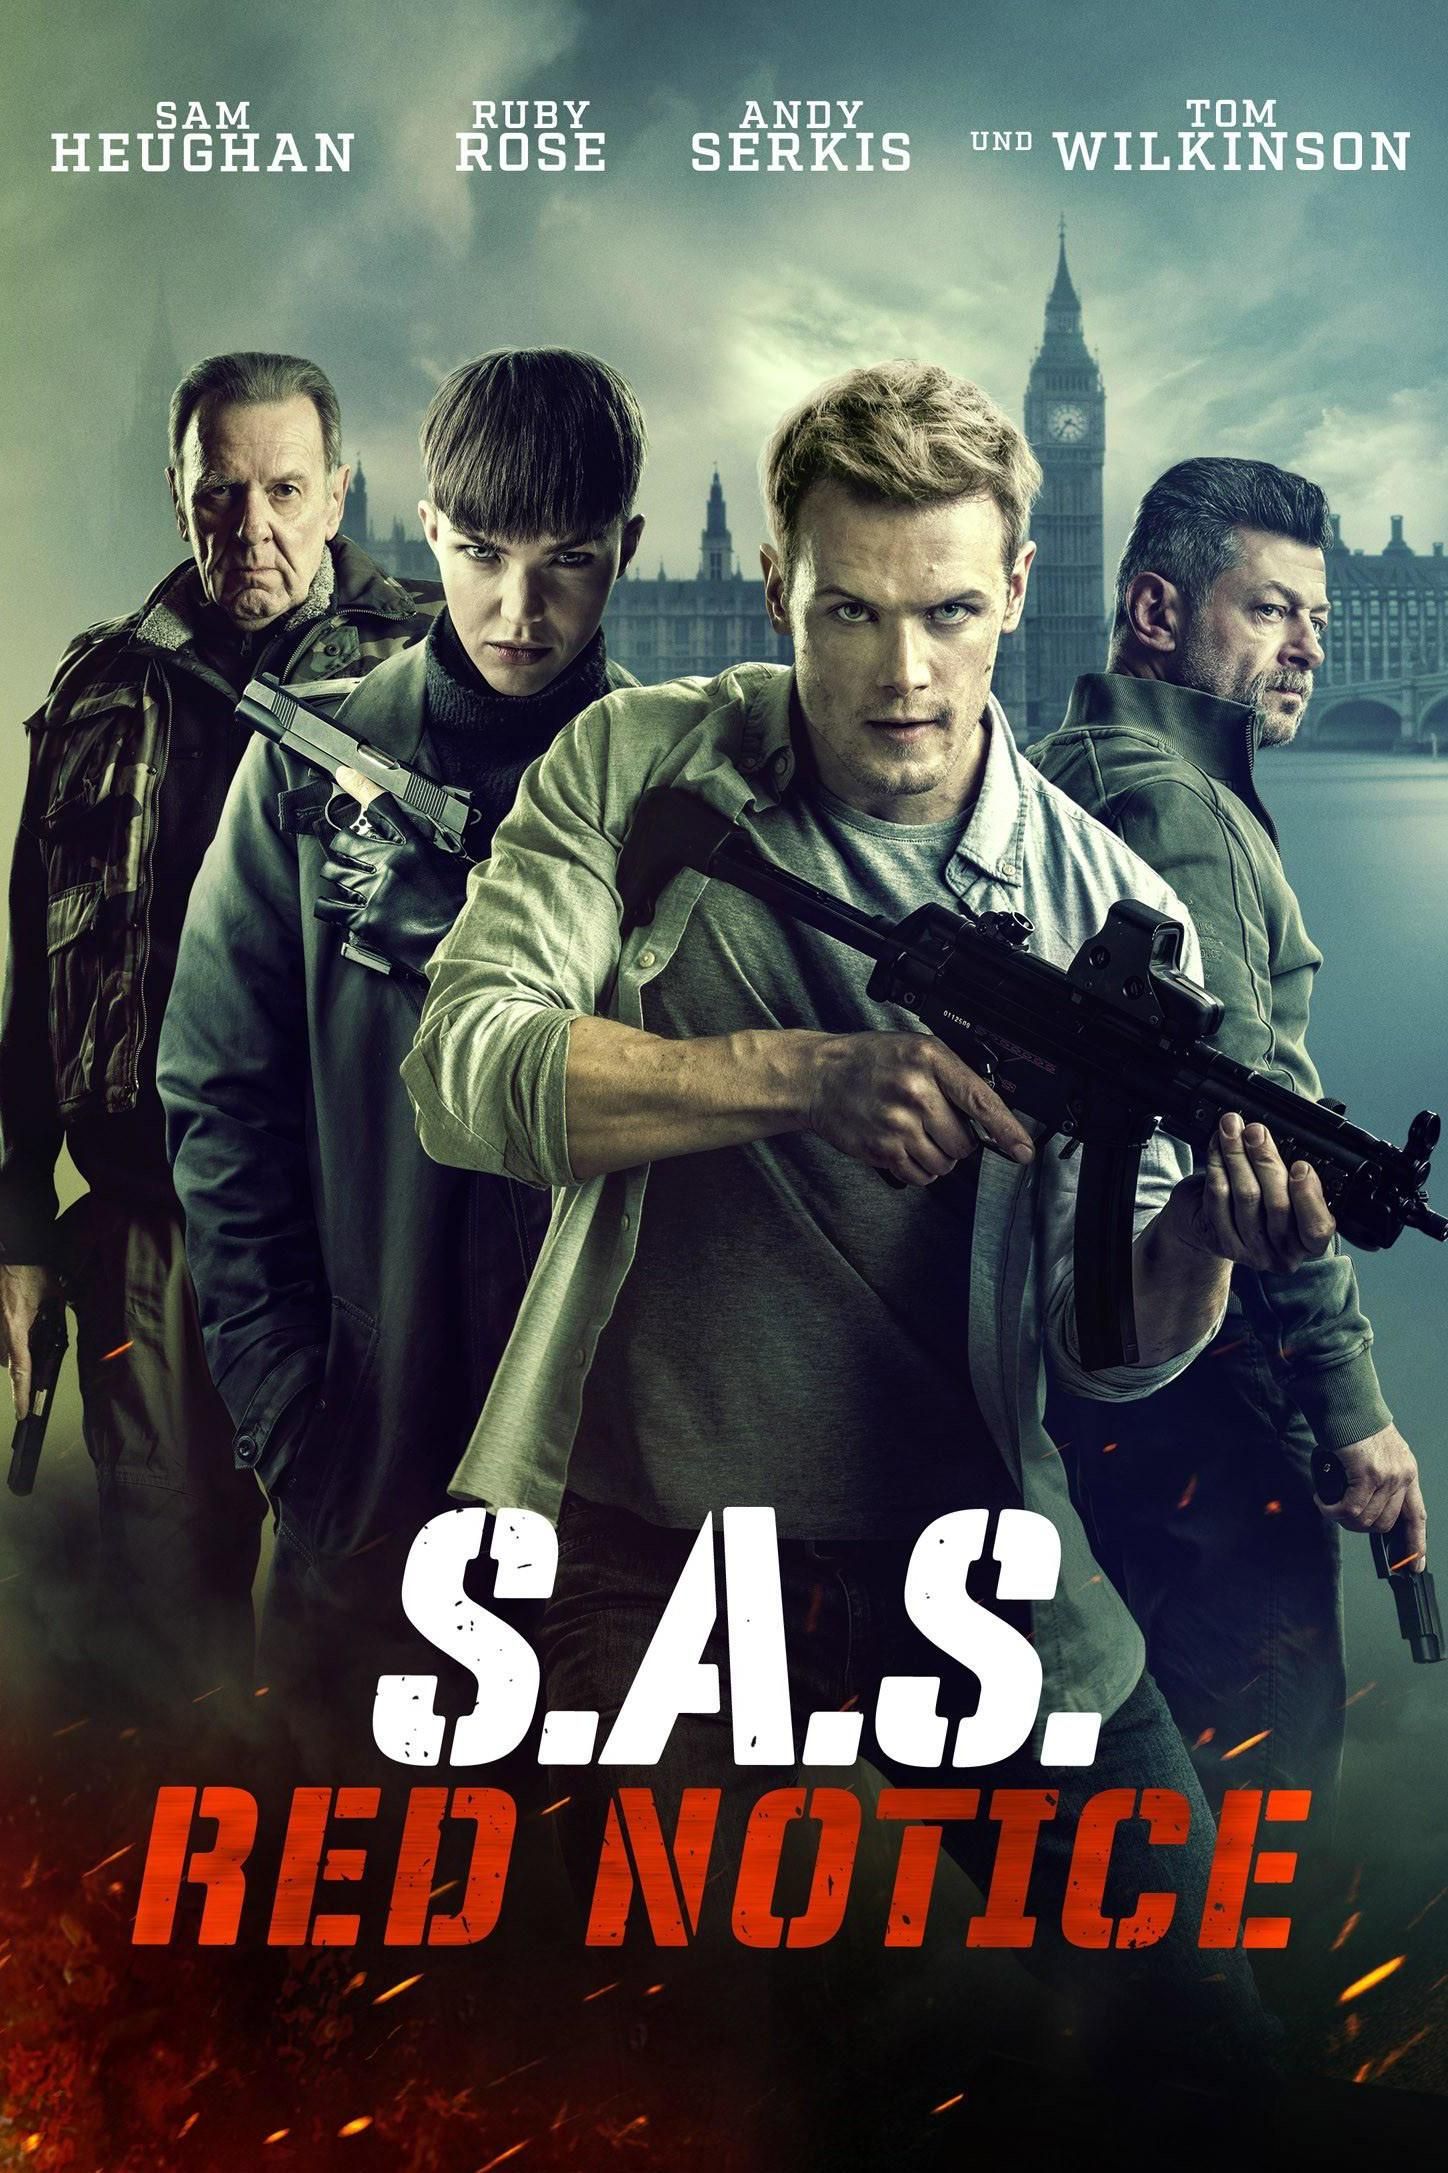 bånd Skat privat SAS: Red Notice (2021) Movie Information & Trailers | KinoCheck